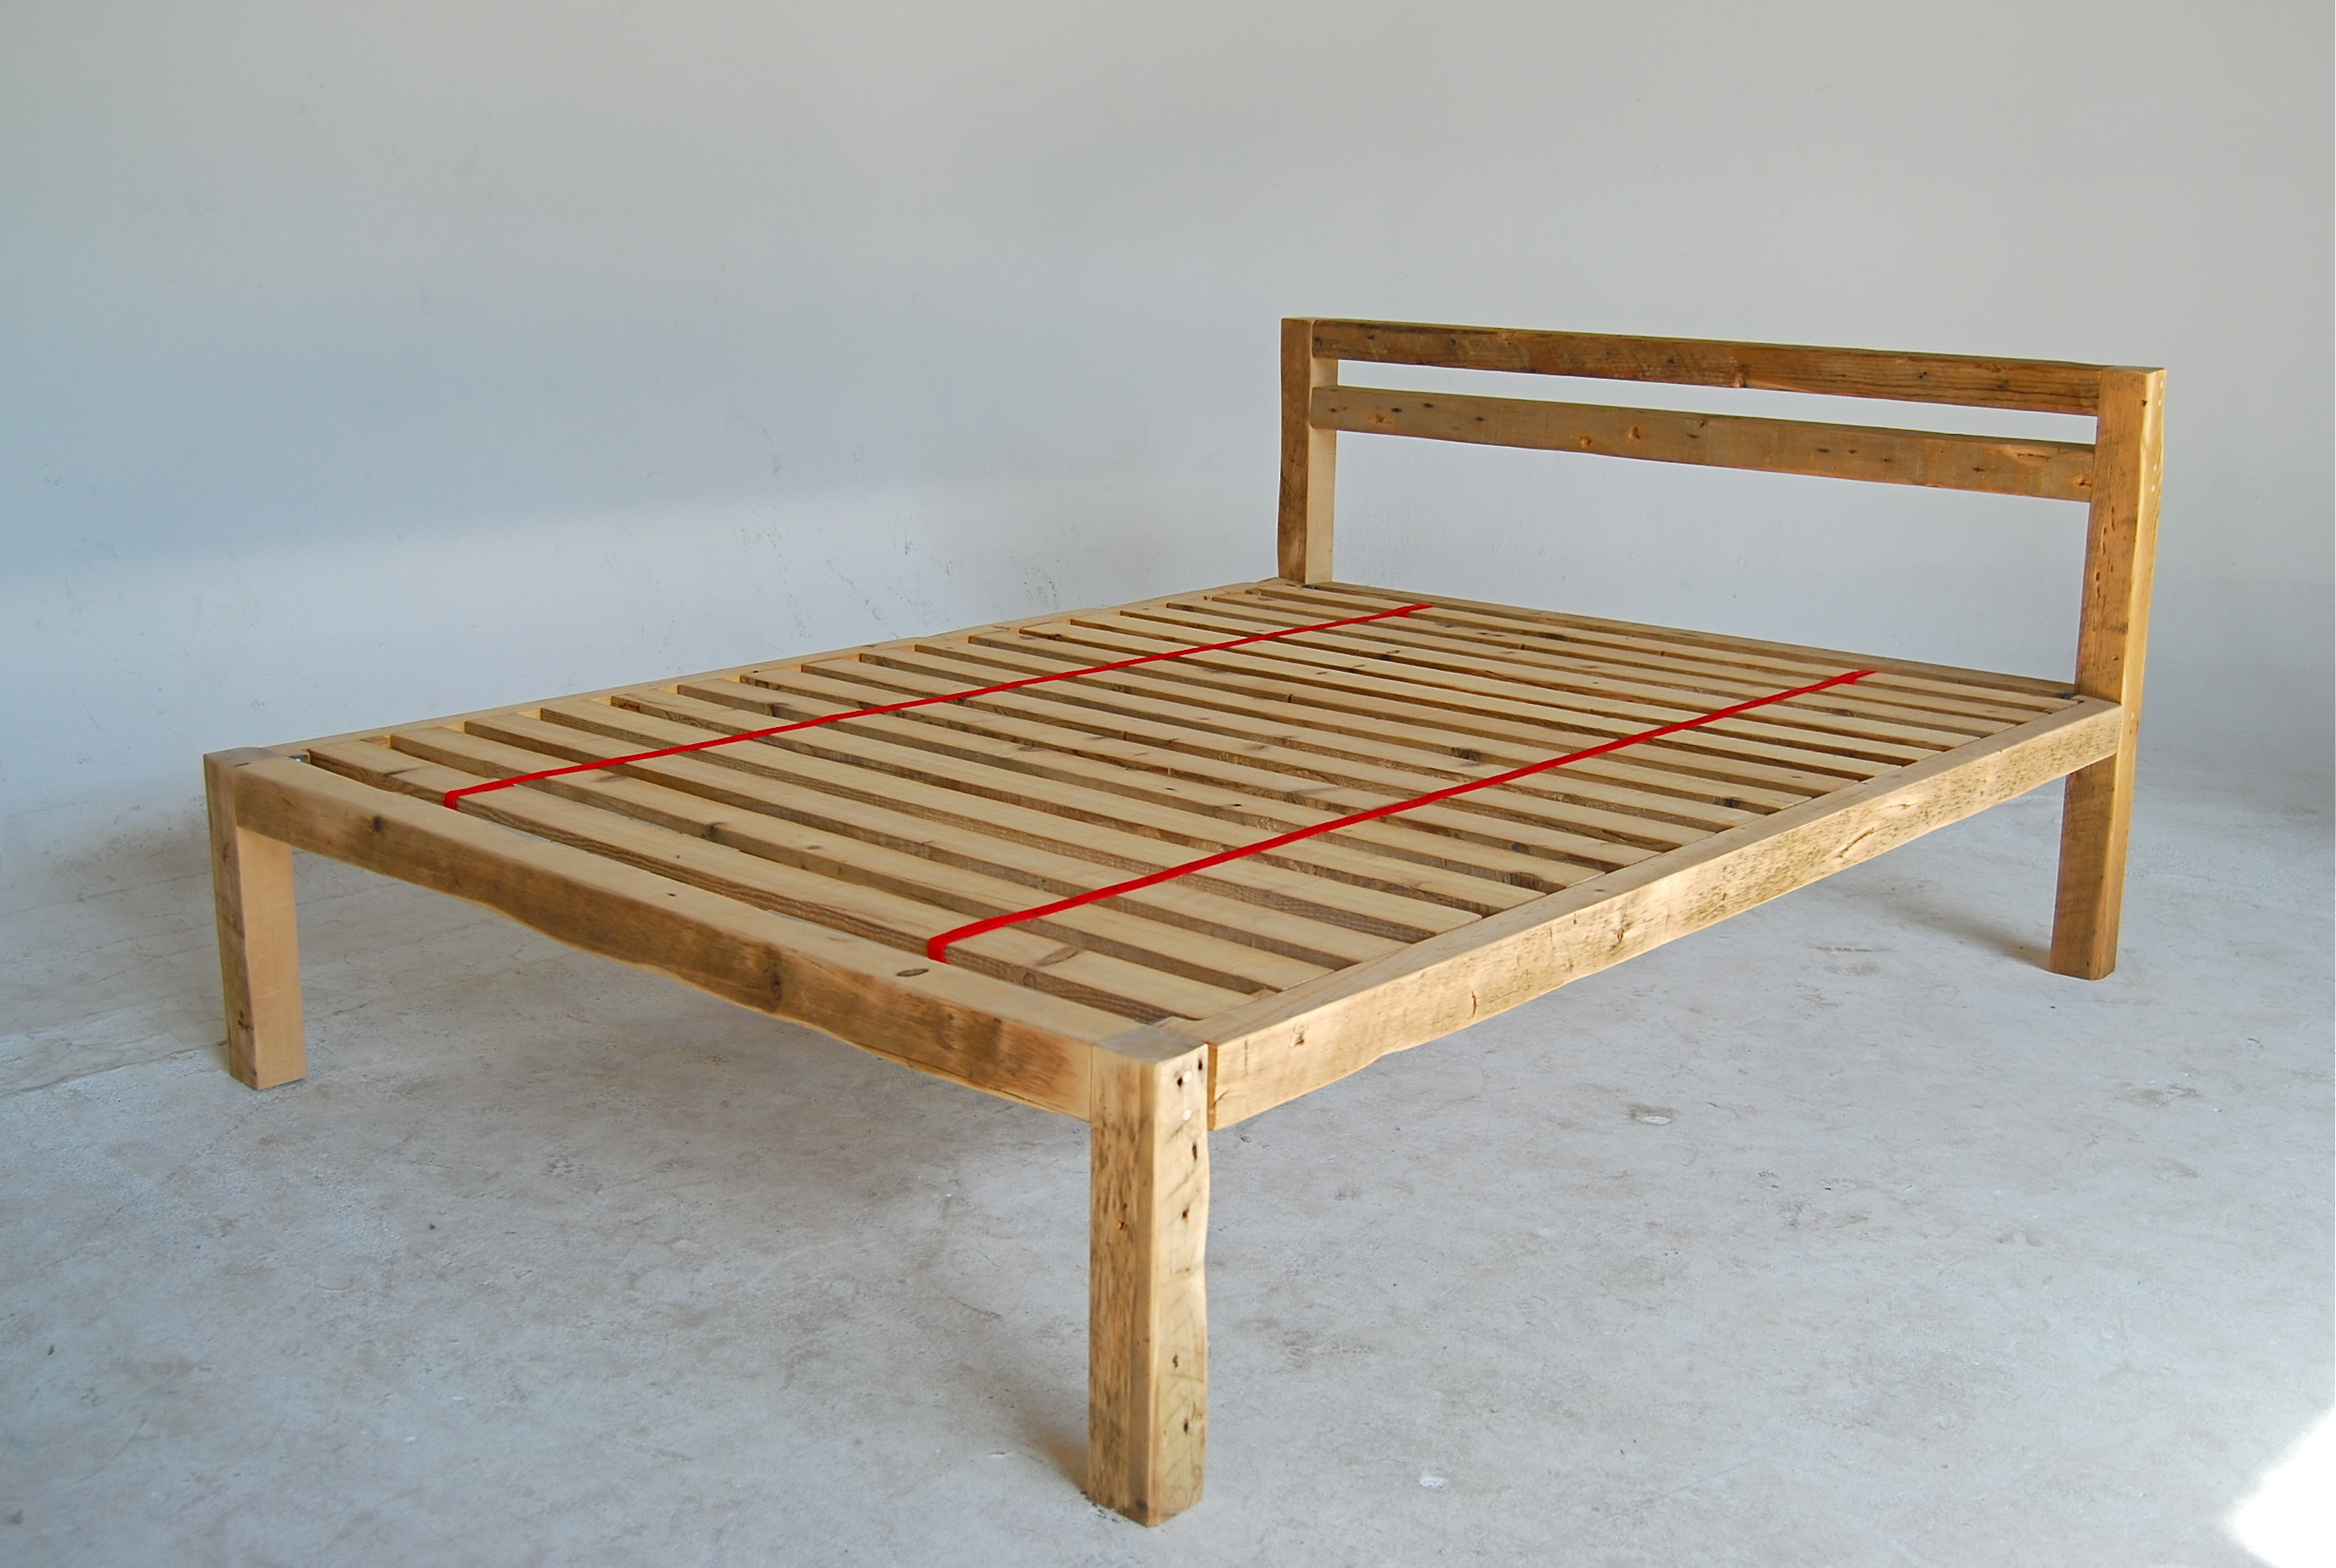 Best ideas about Platform Bed DIY Plans
. Save or Pin dsc 0037 Now.